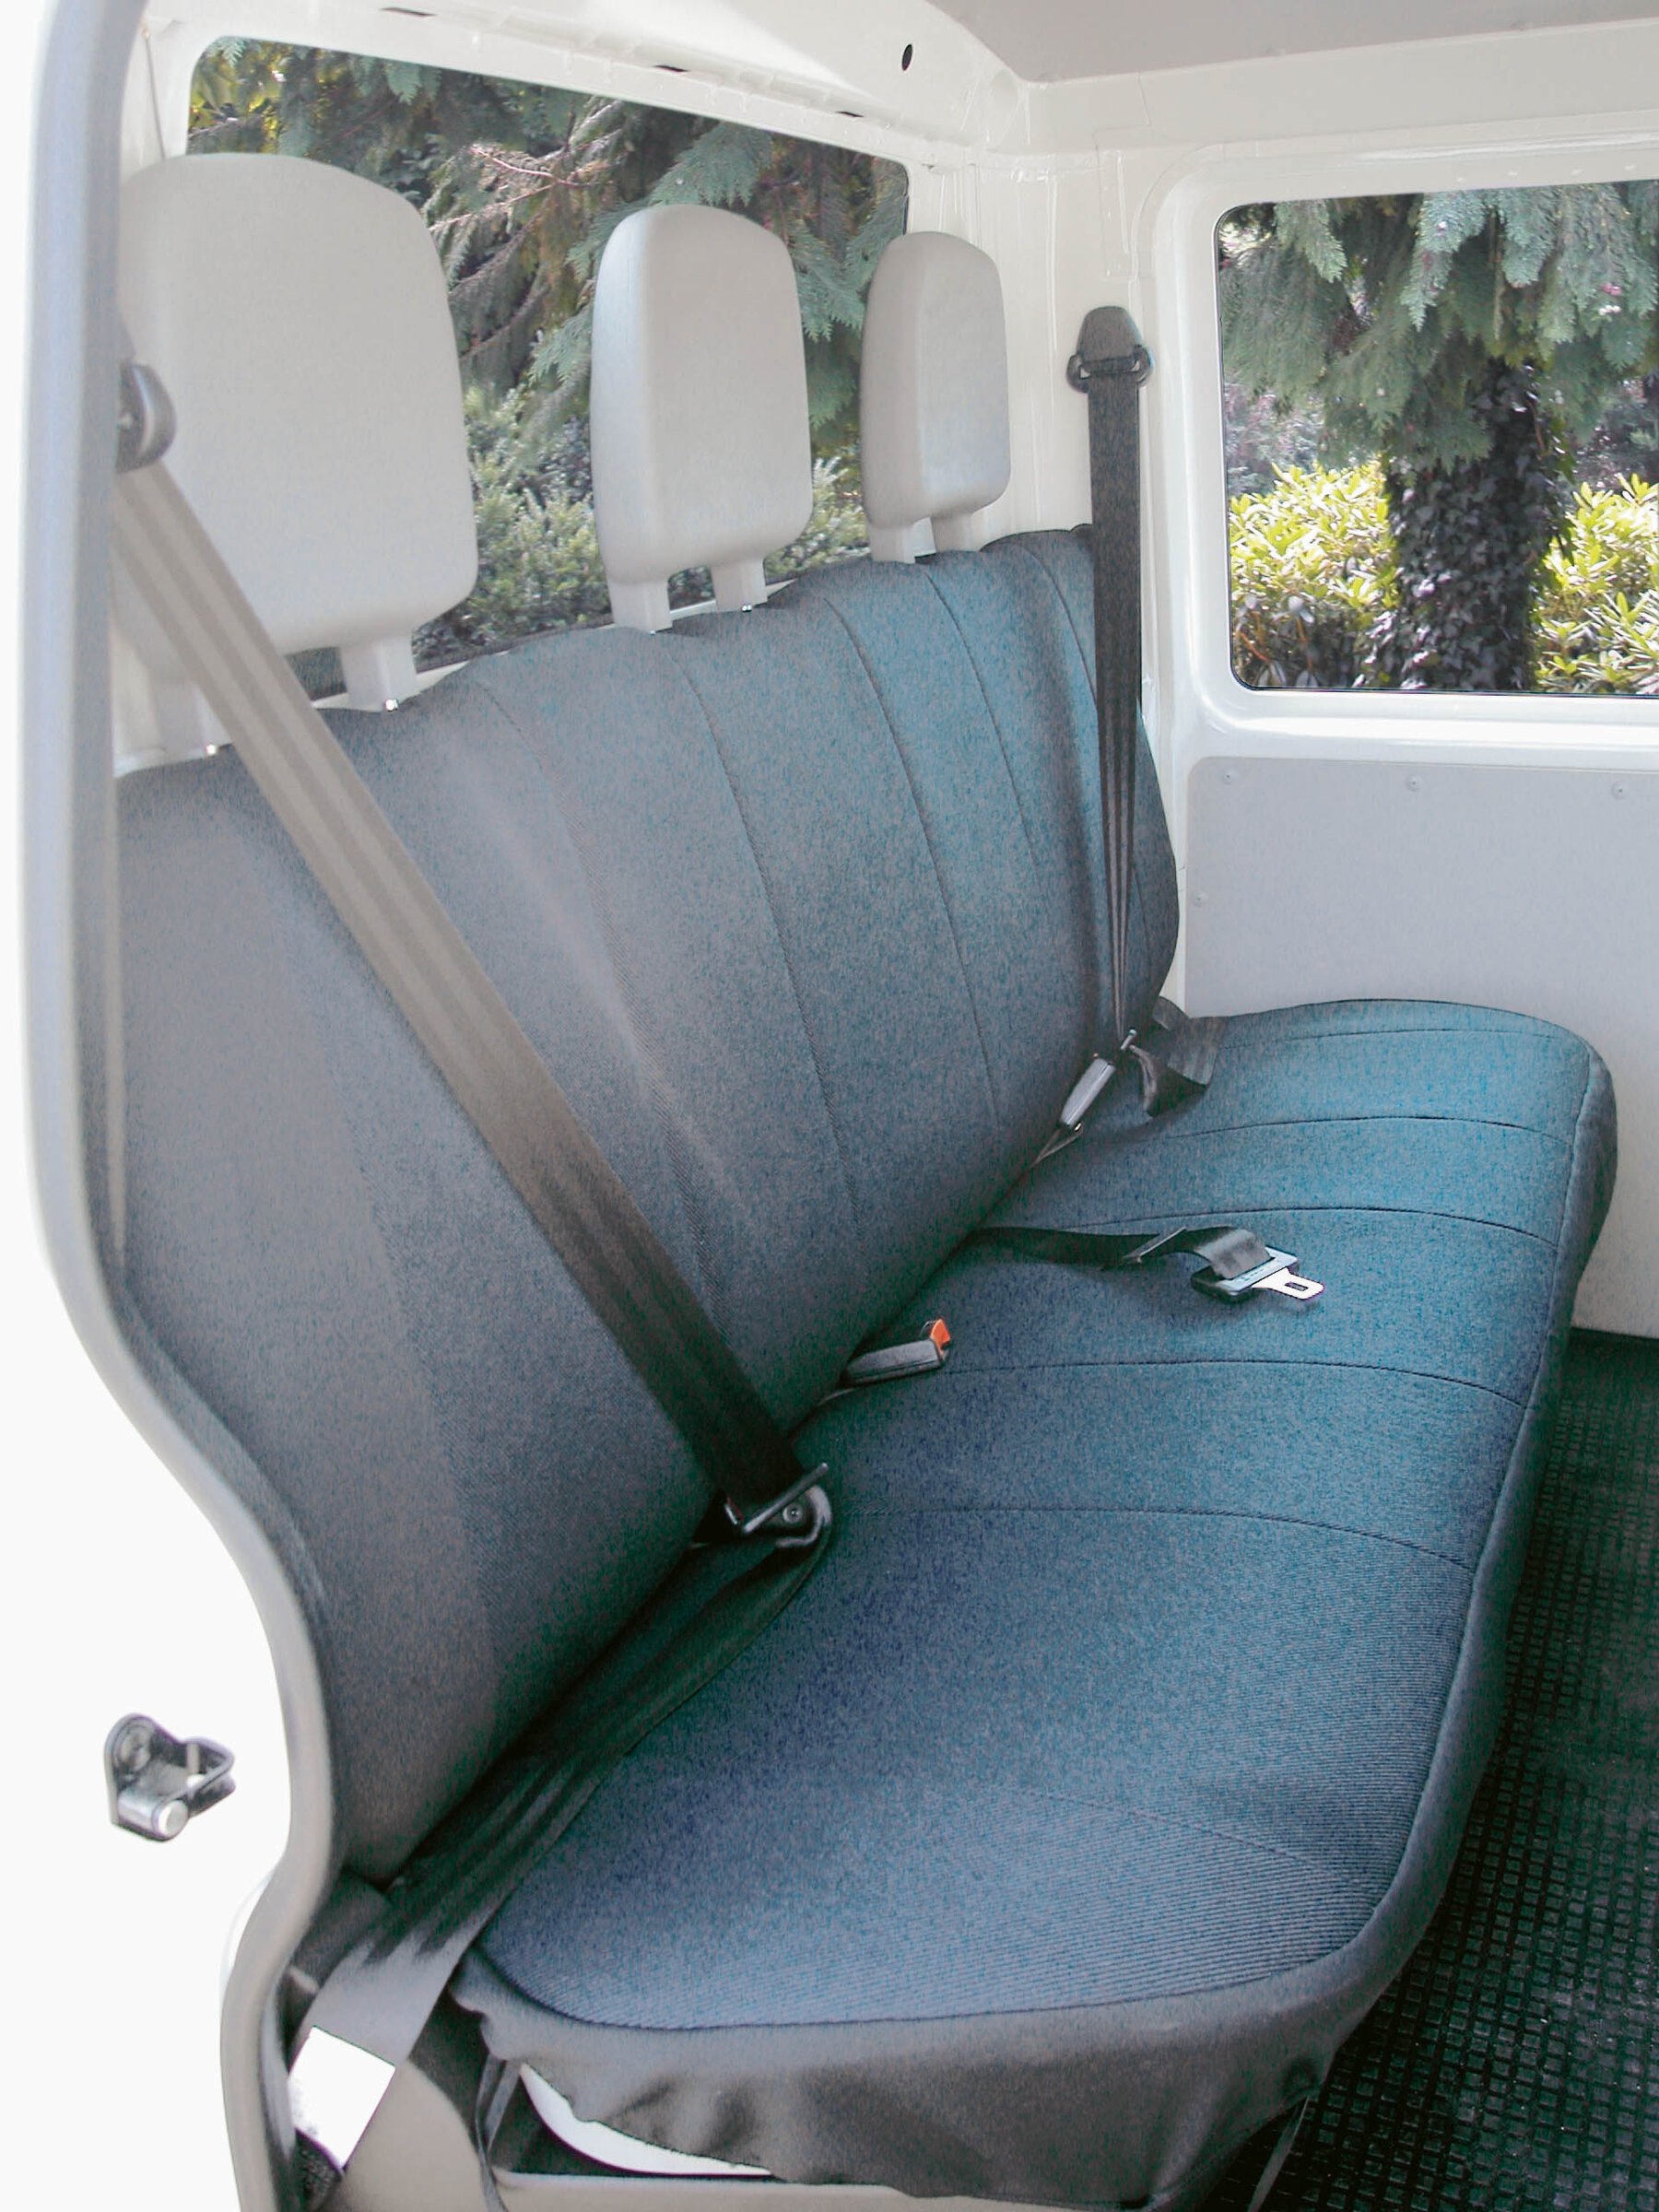 Passform Sitzbezug aus Stoff kompatibel mit VW T4, 3er Bank